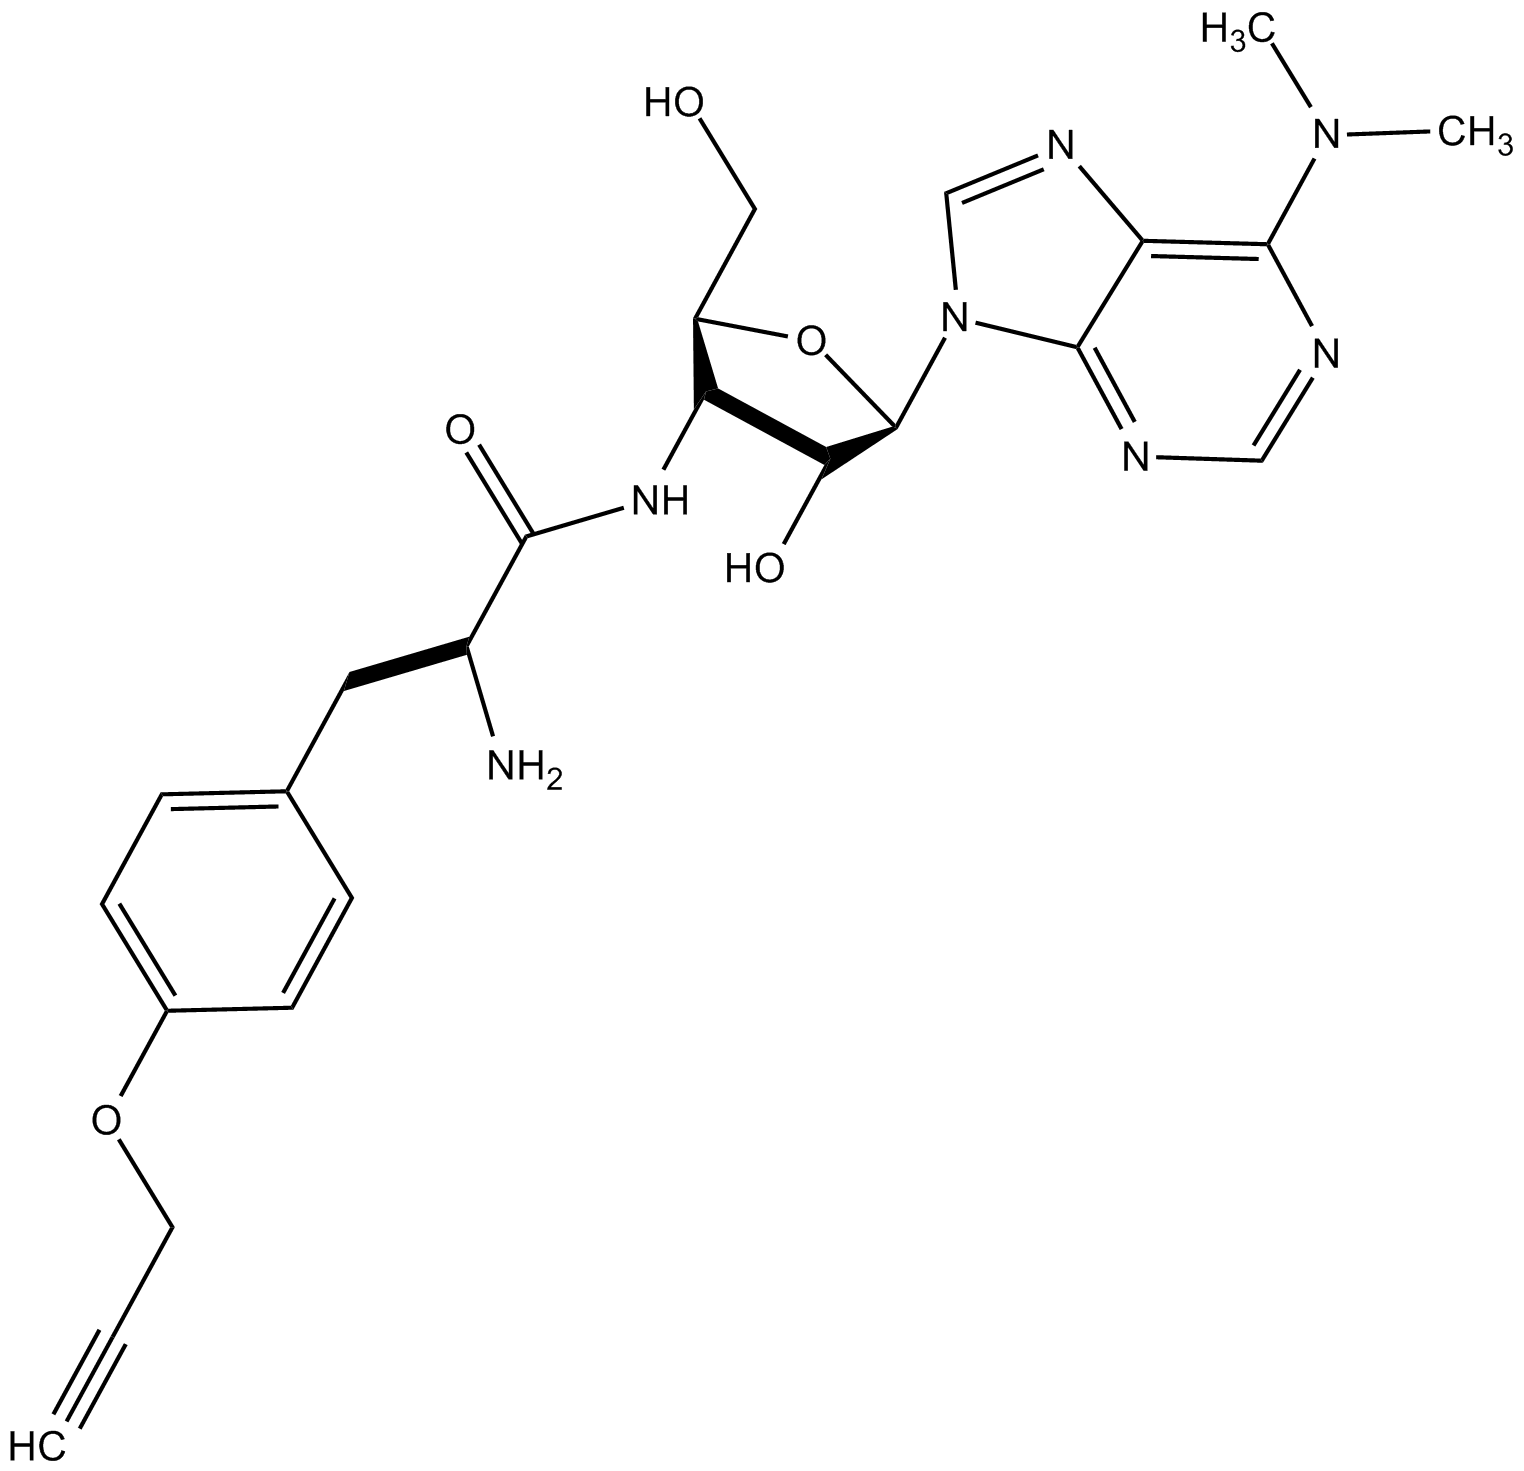 O-propargyl-puromycin (OPP)